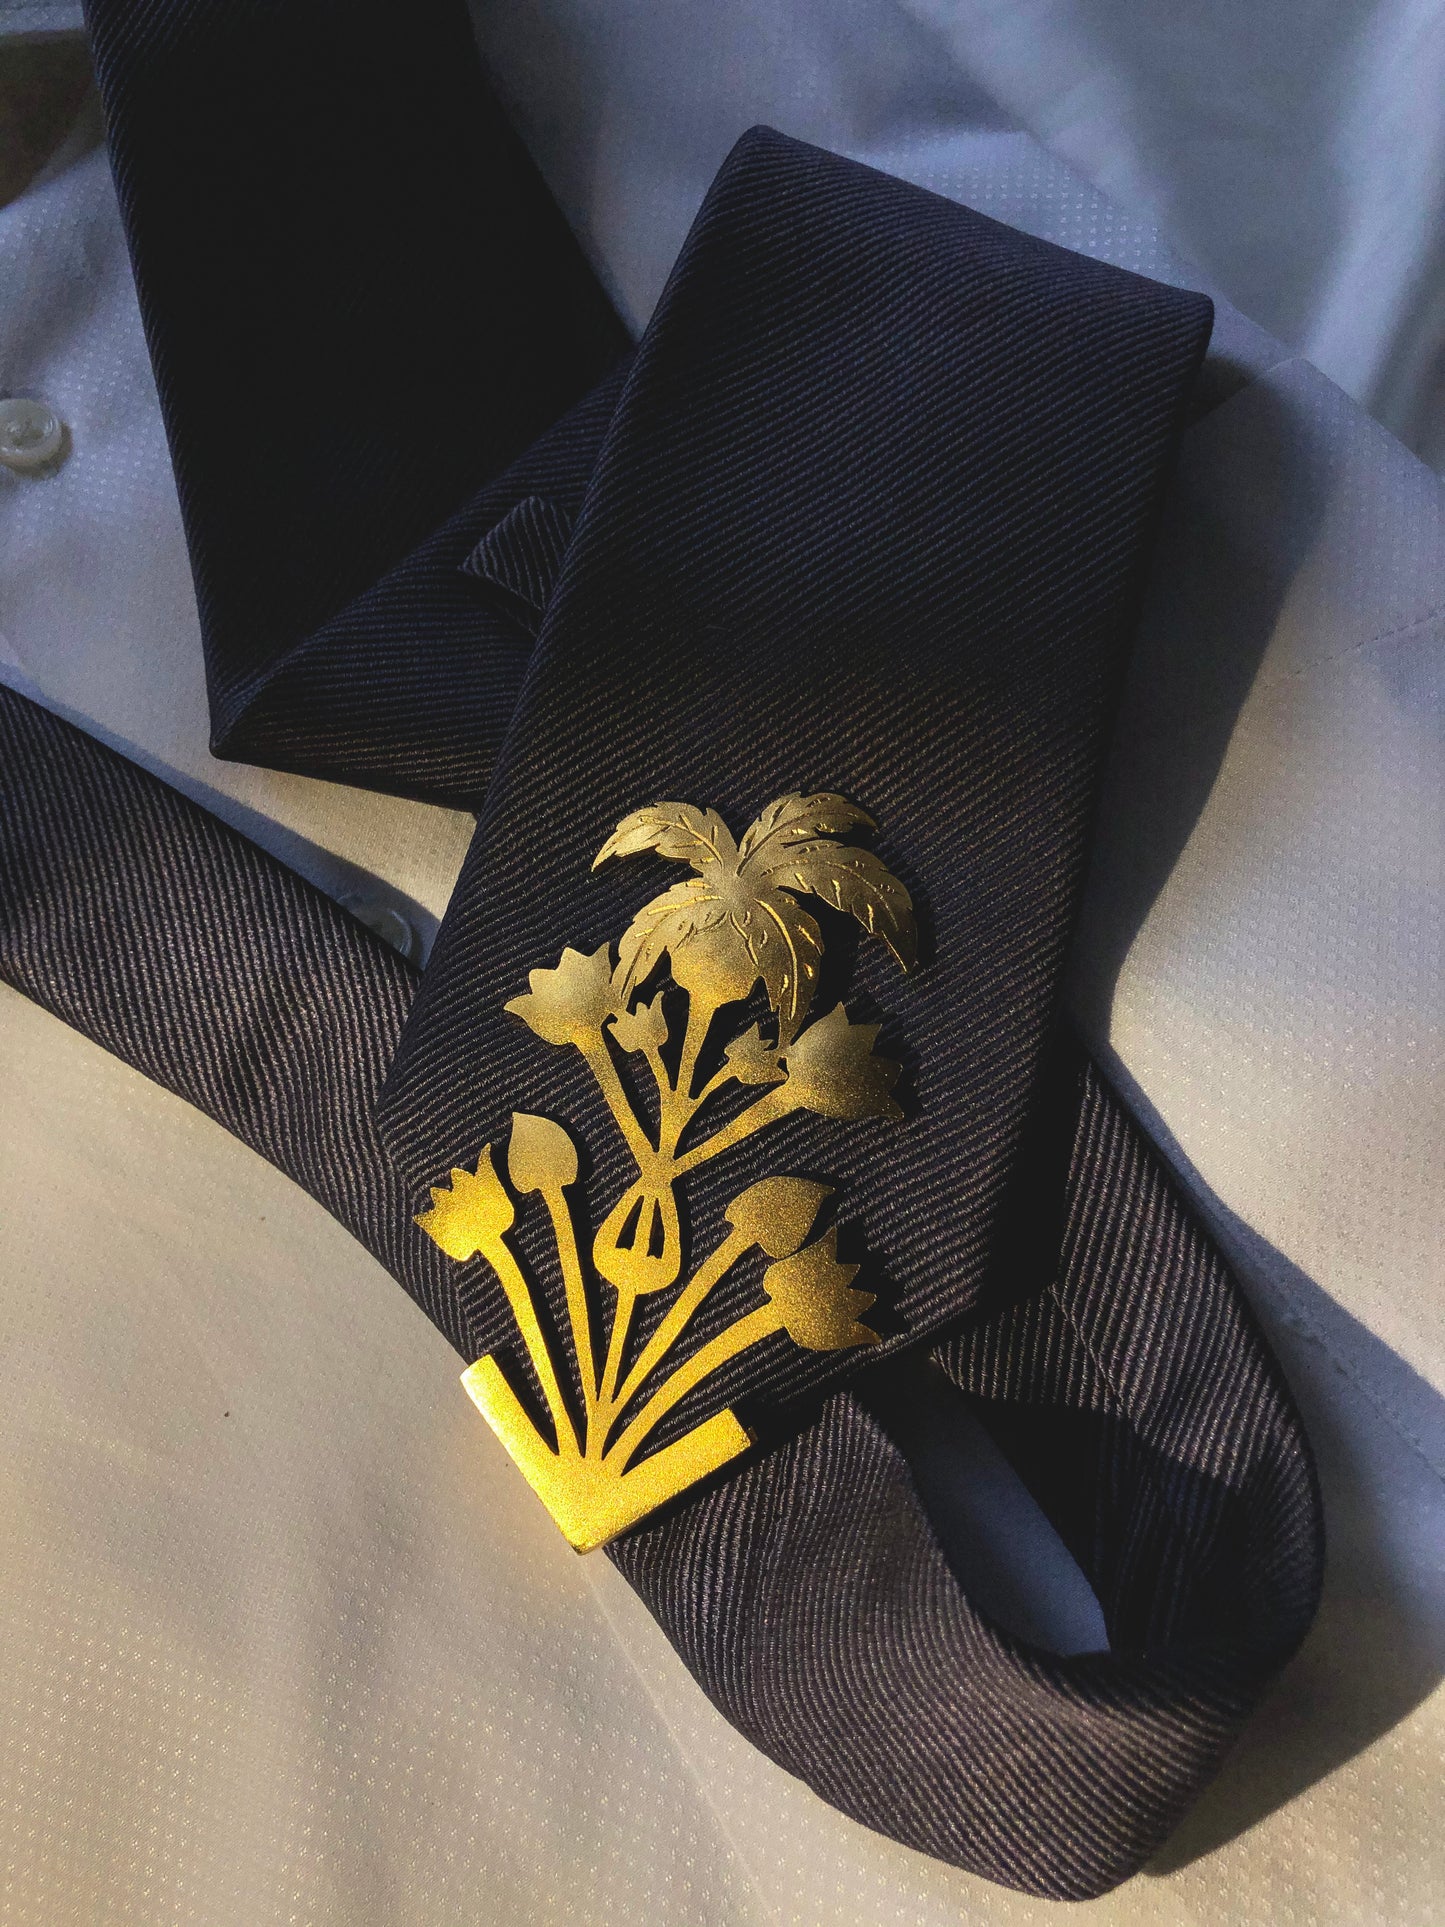 Tropico Textured Tie - Gold